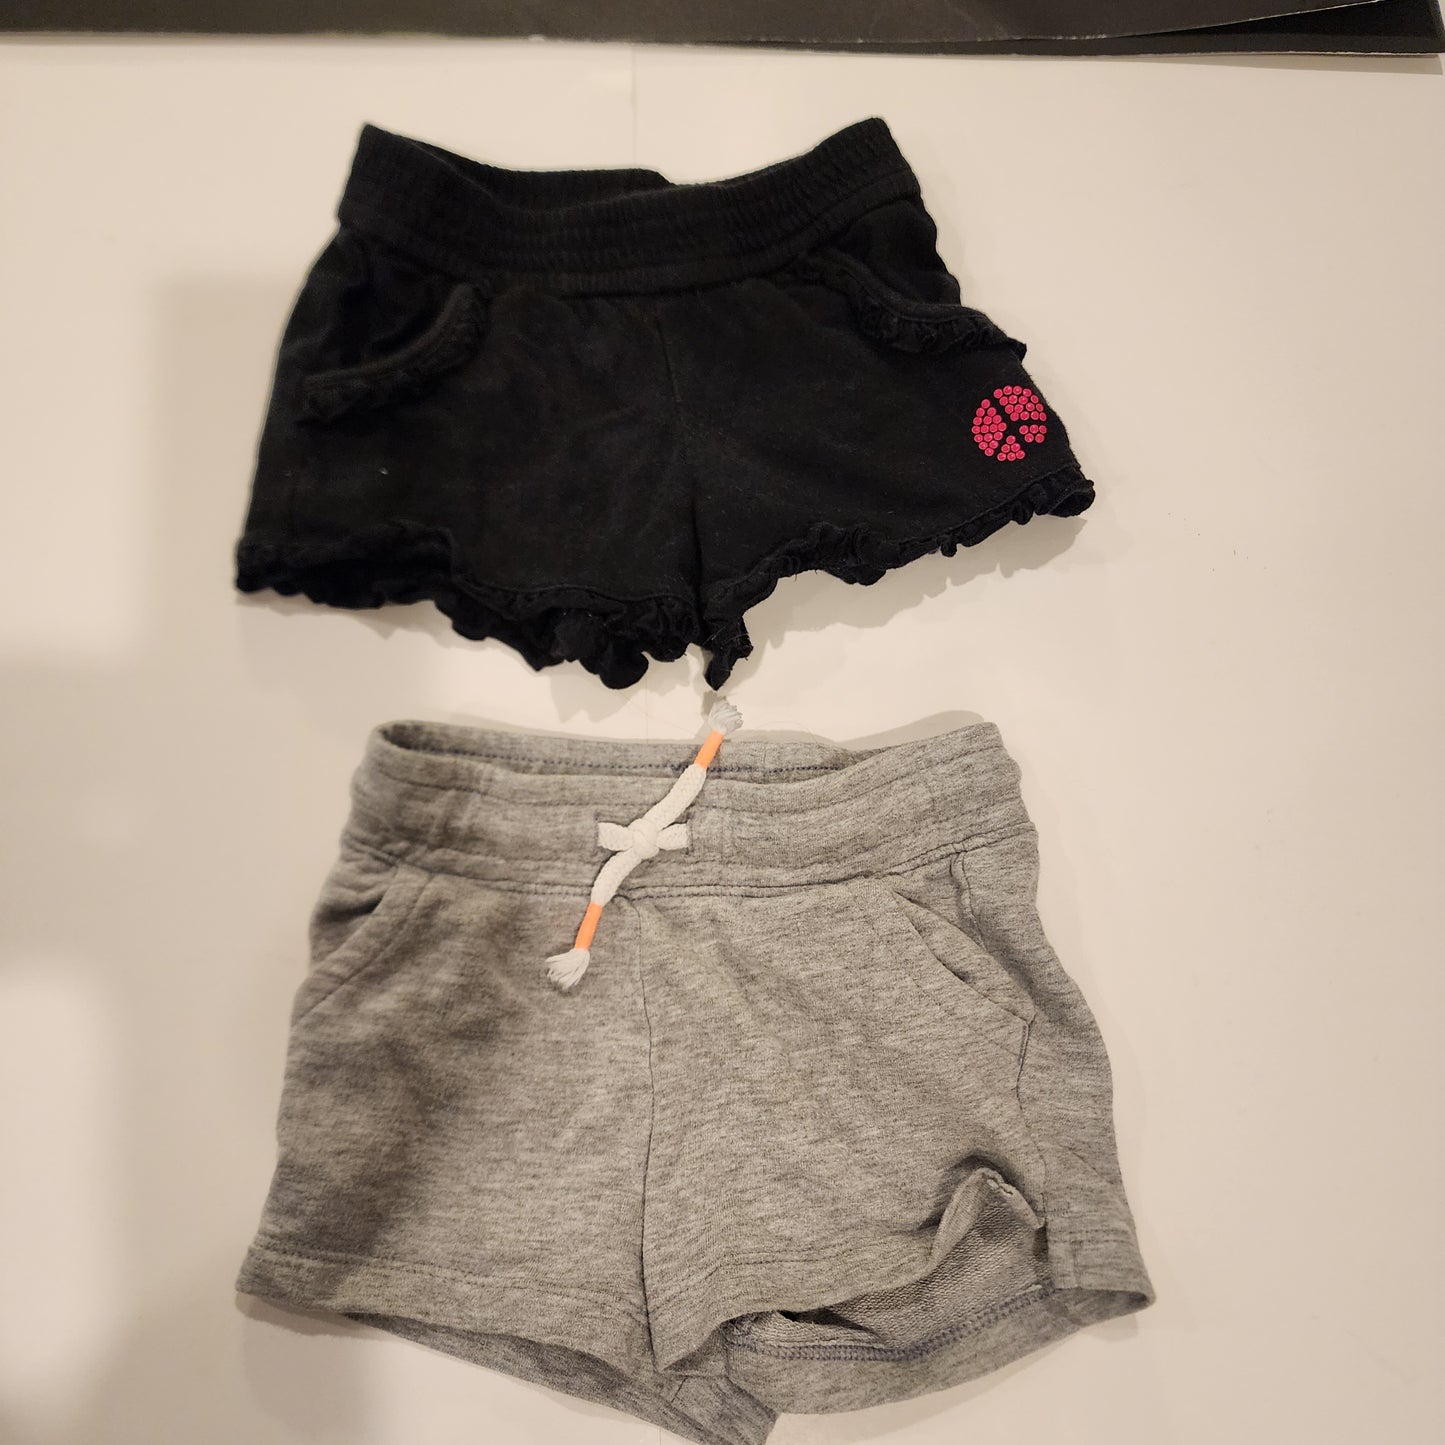 Girls 3T Mixed Brand shorts